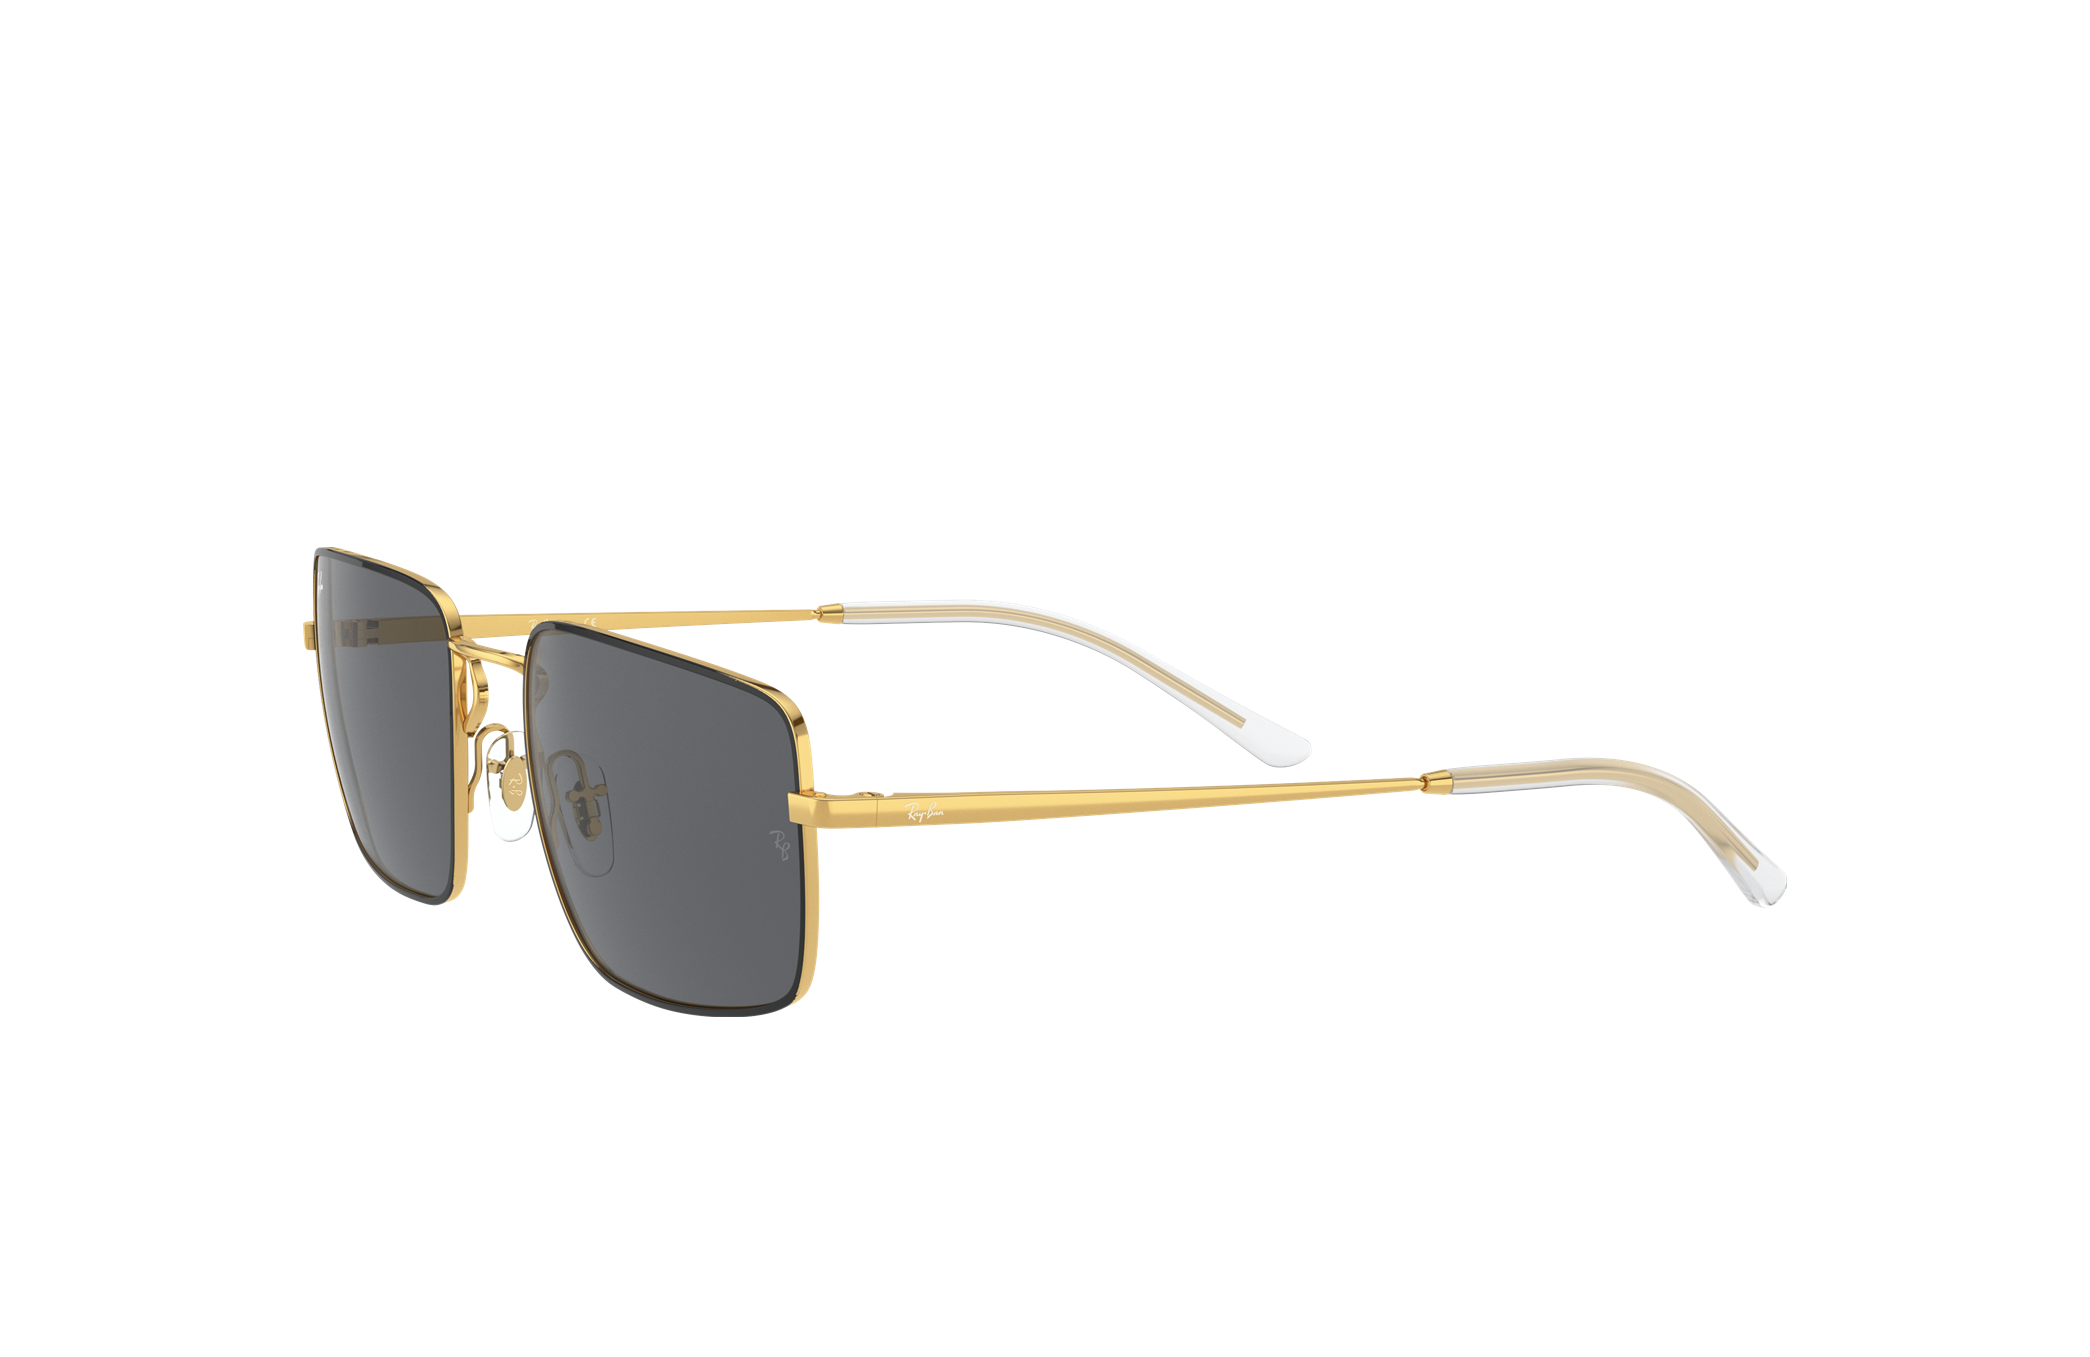 Columbia Men's Shiny Gold Frame Sunglasses   Reg $69 